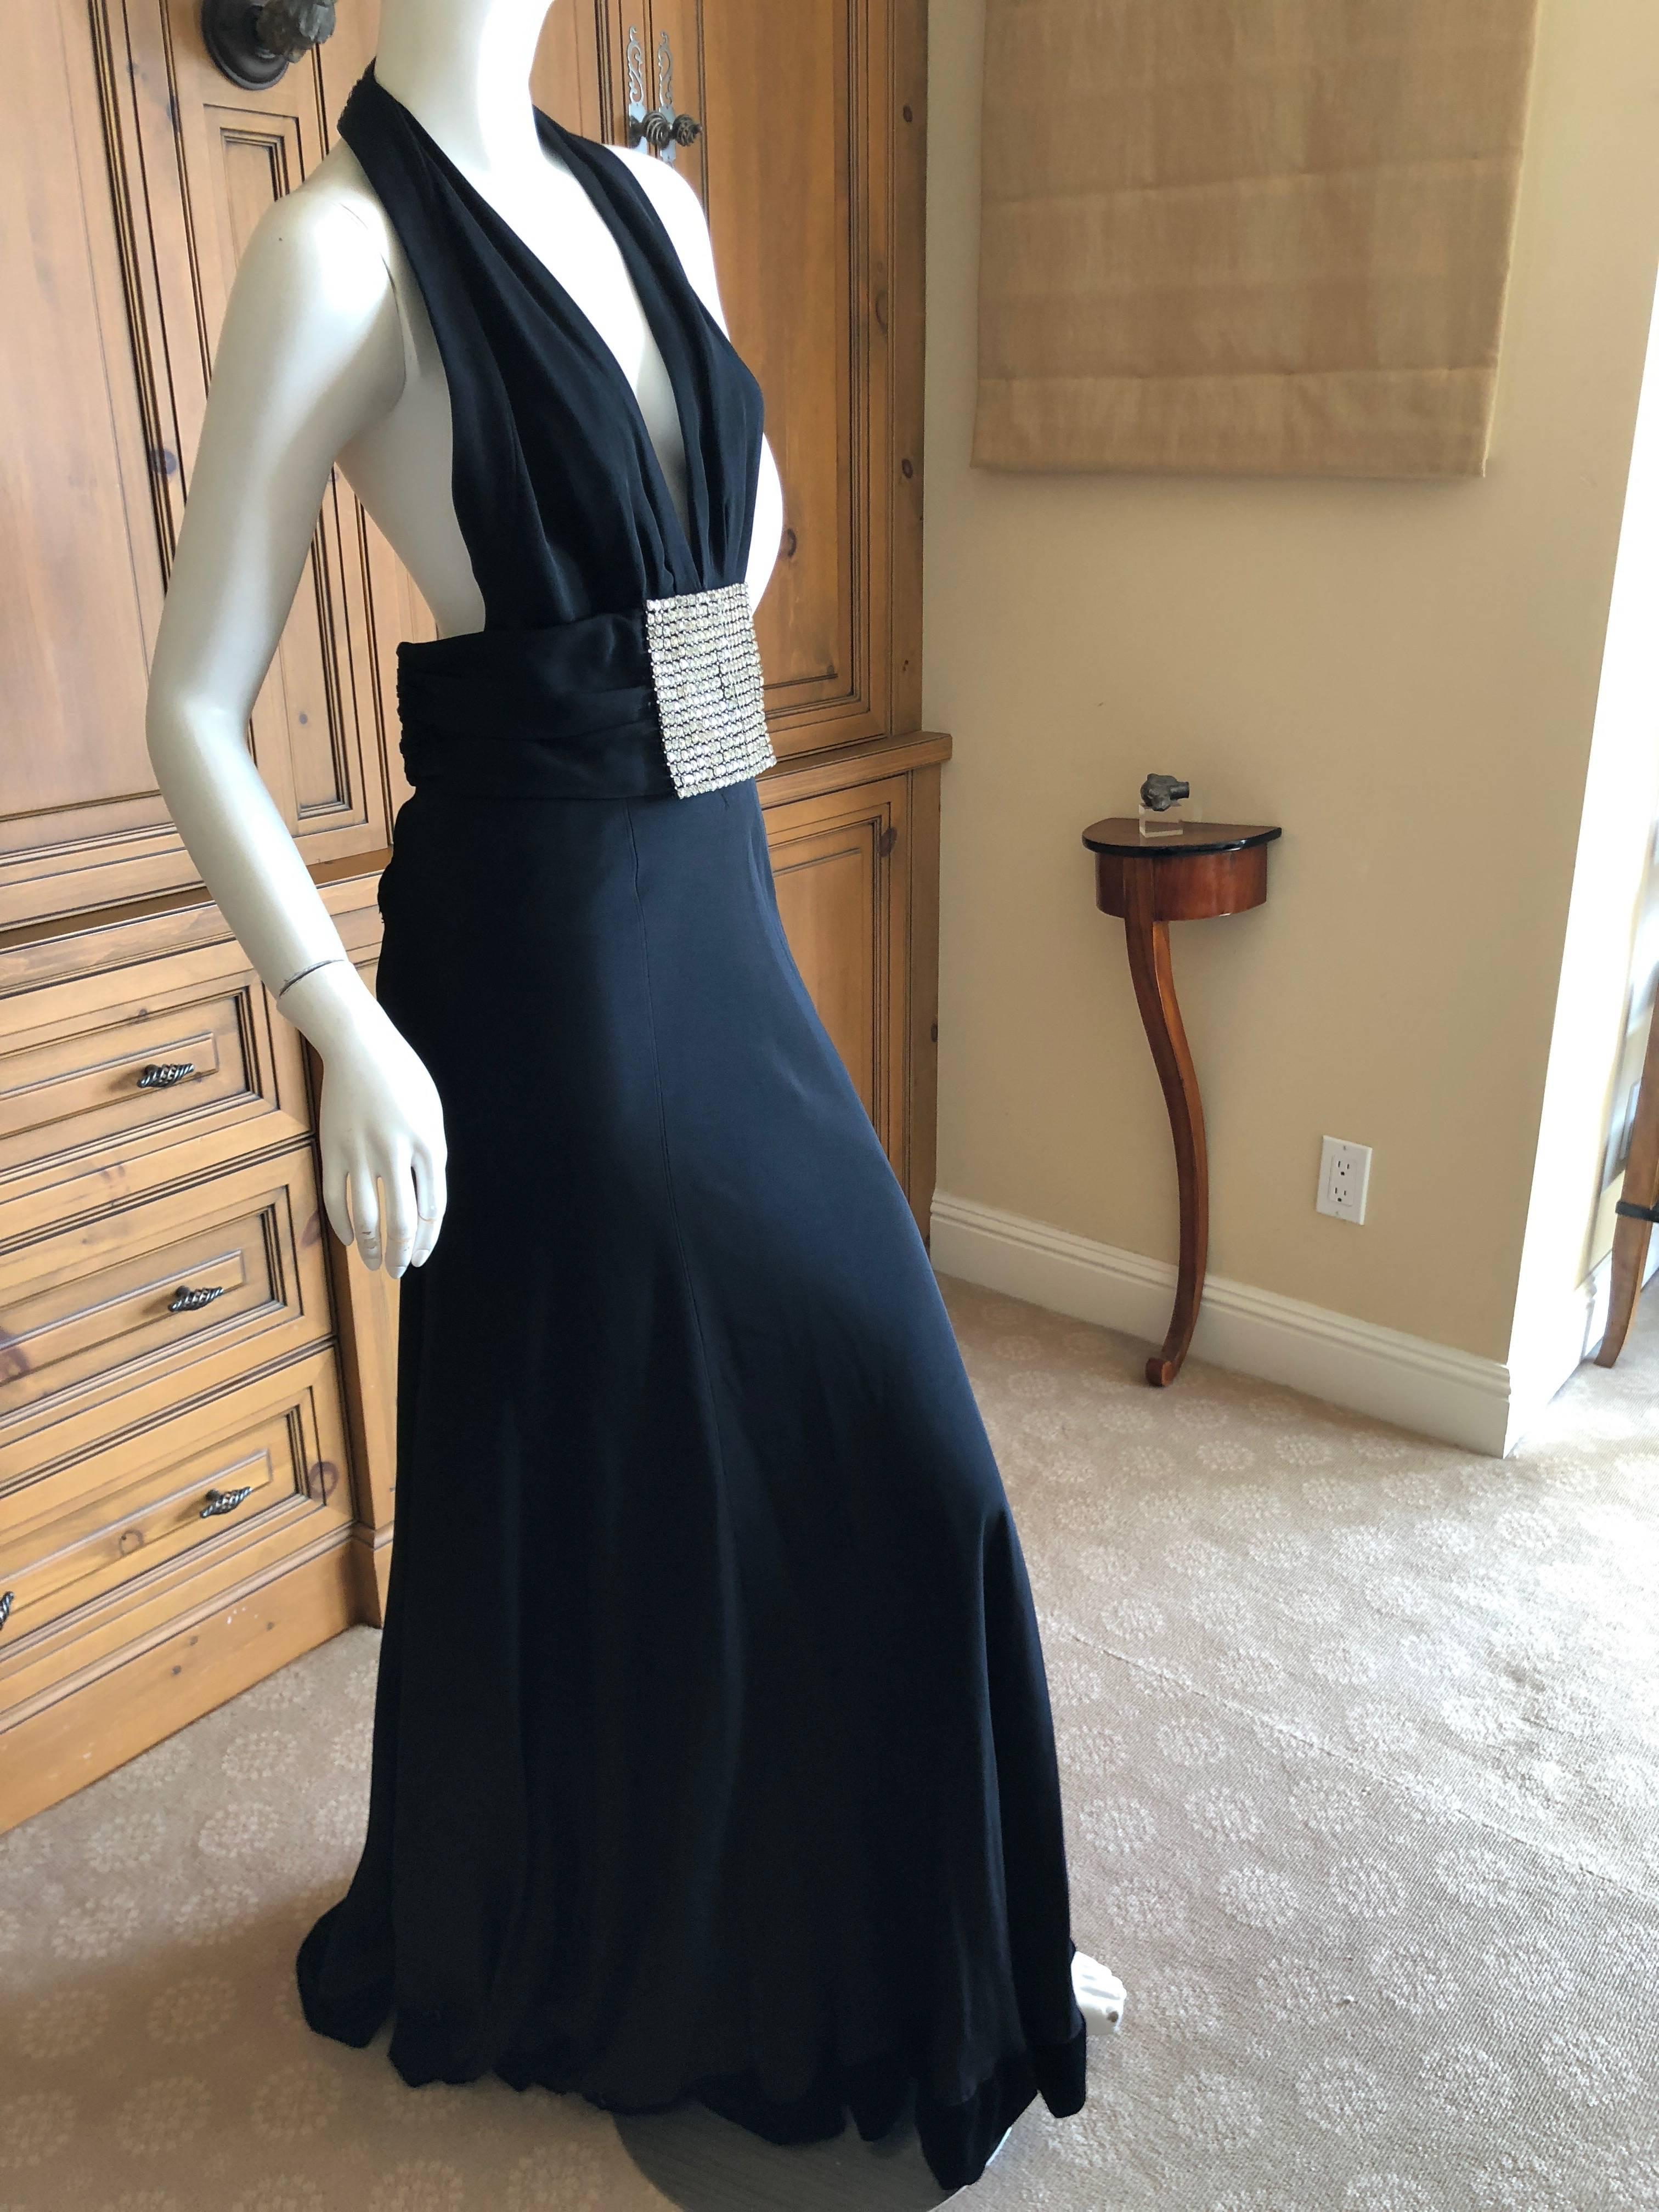 Cardinali Black Low Cut Halter Evening Dress with Huge Rhinestone Crystal Belt For Sale 3